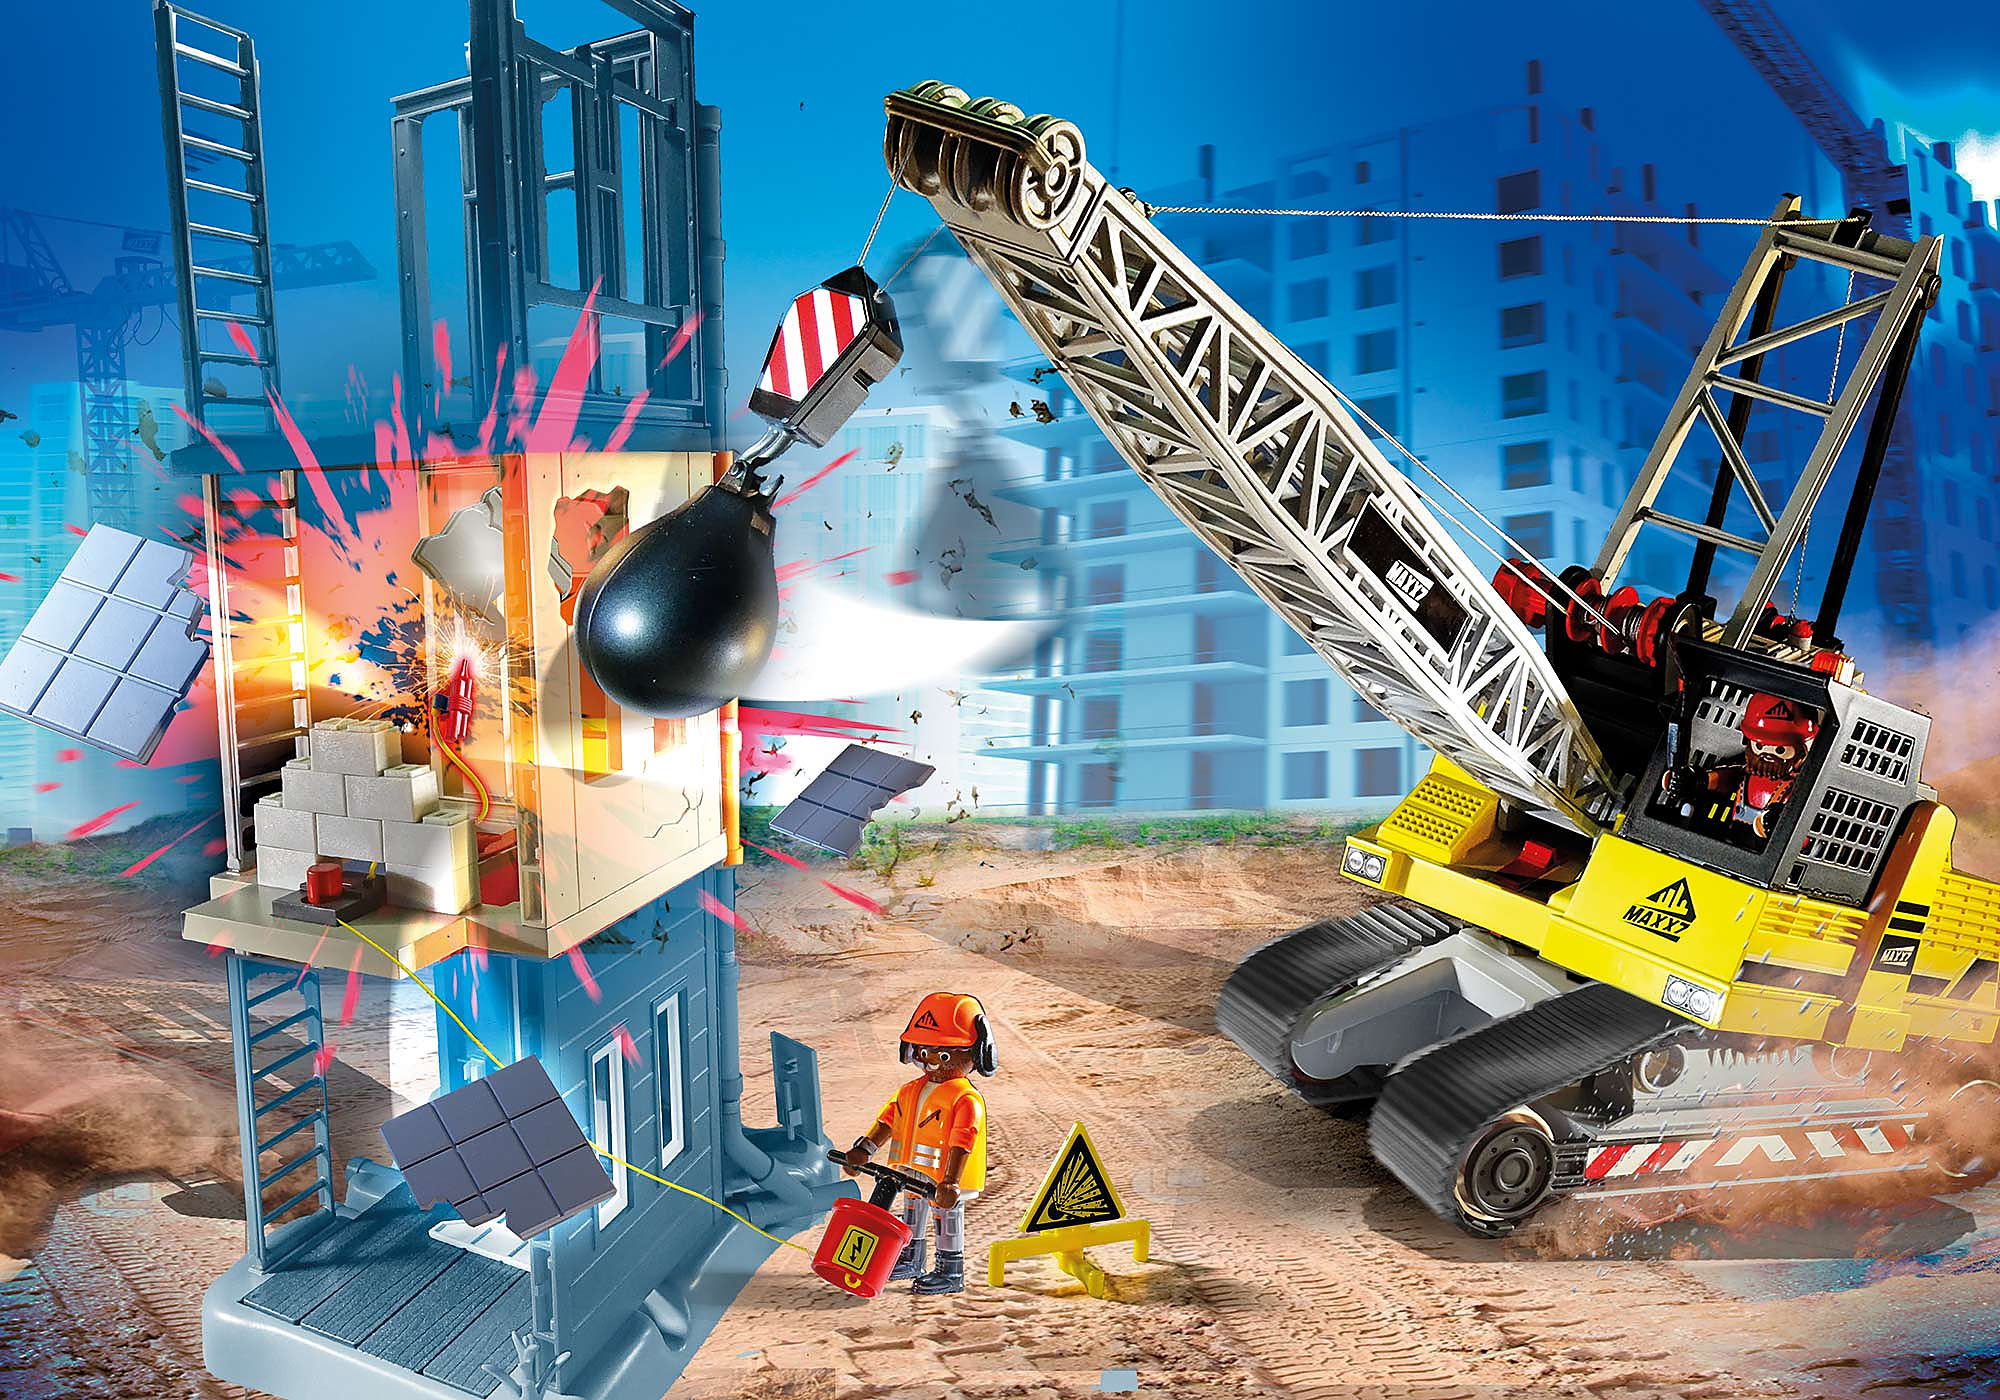 Buy Playmobil 70443 City Action Construction Excavator